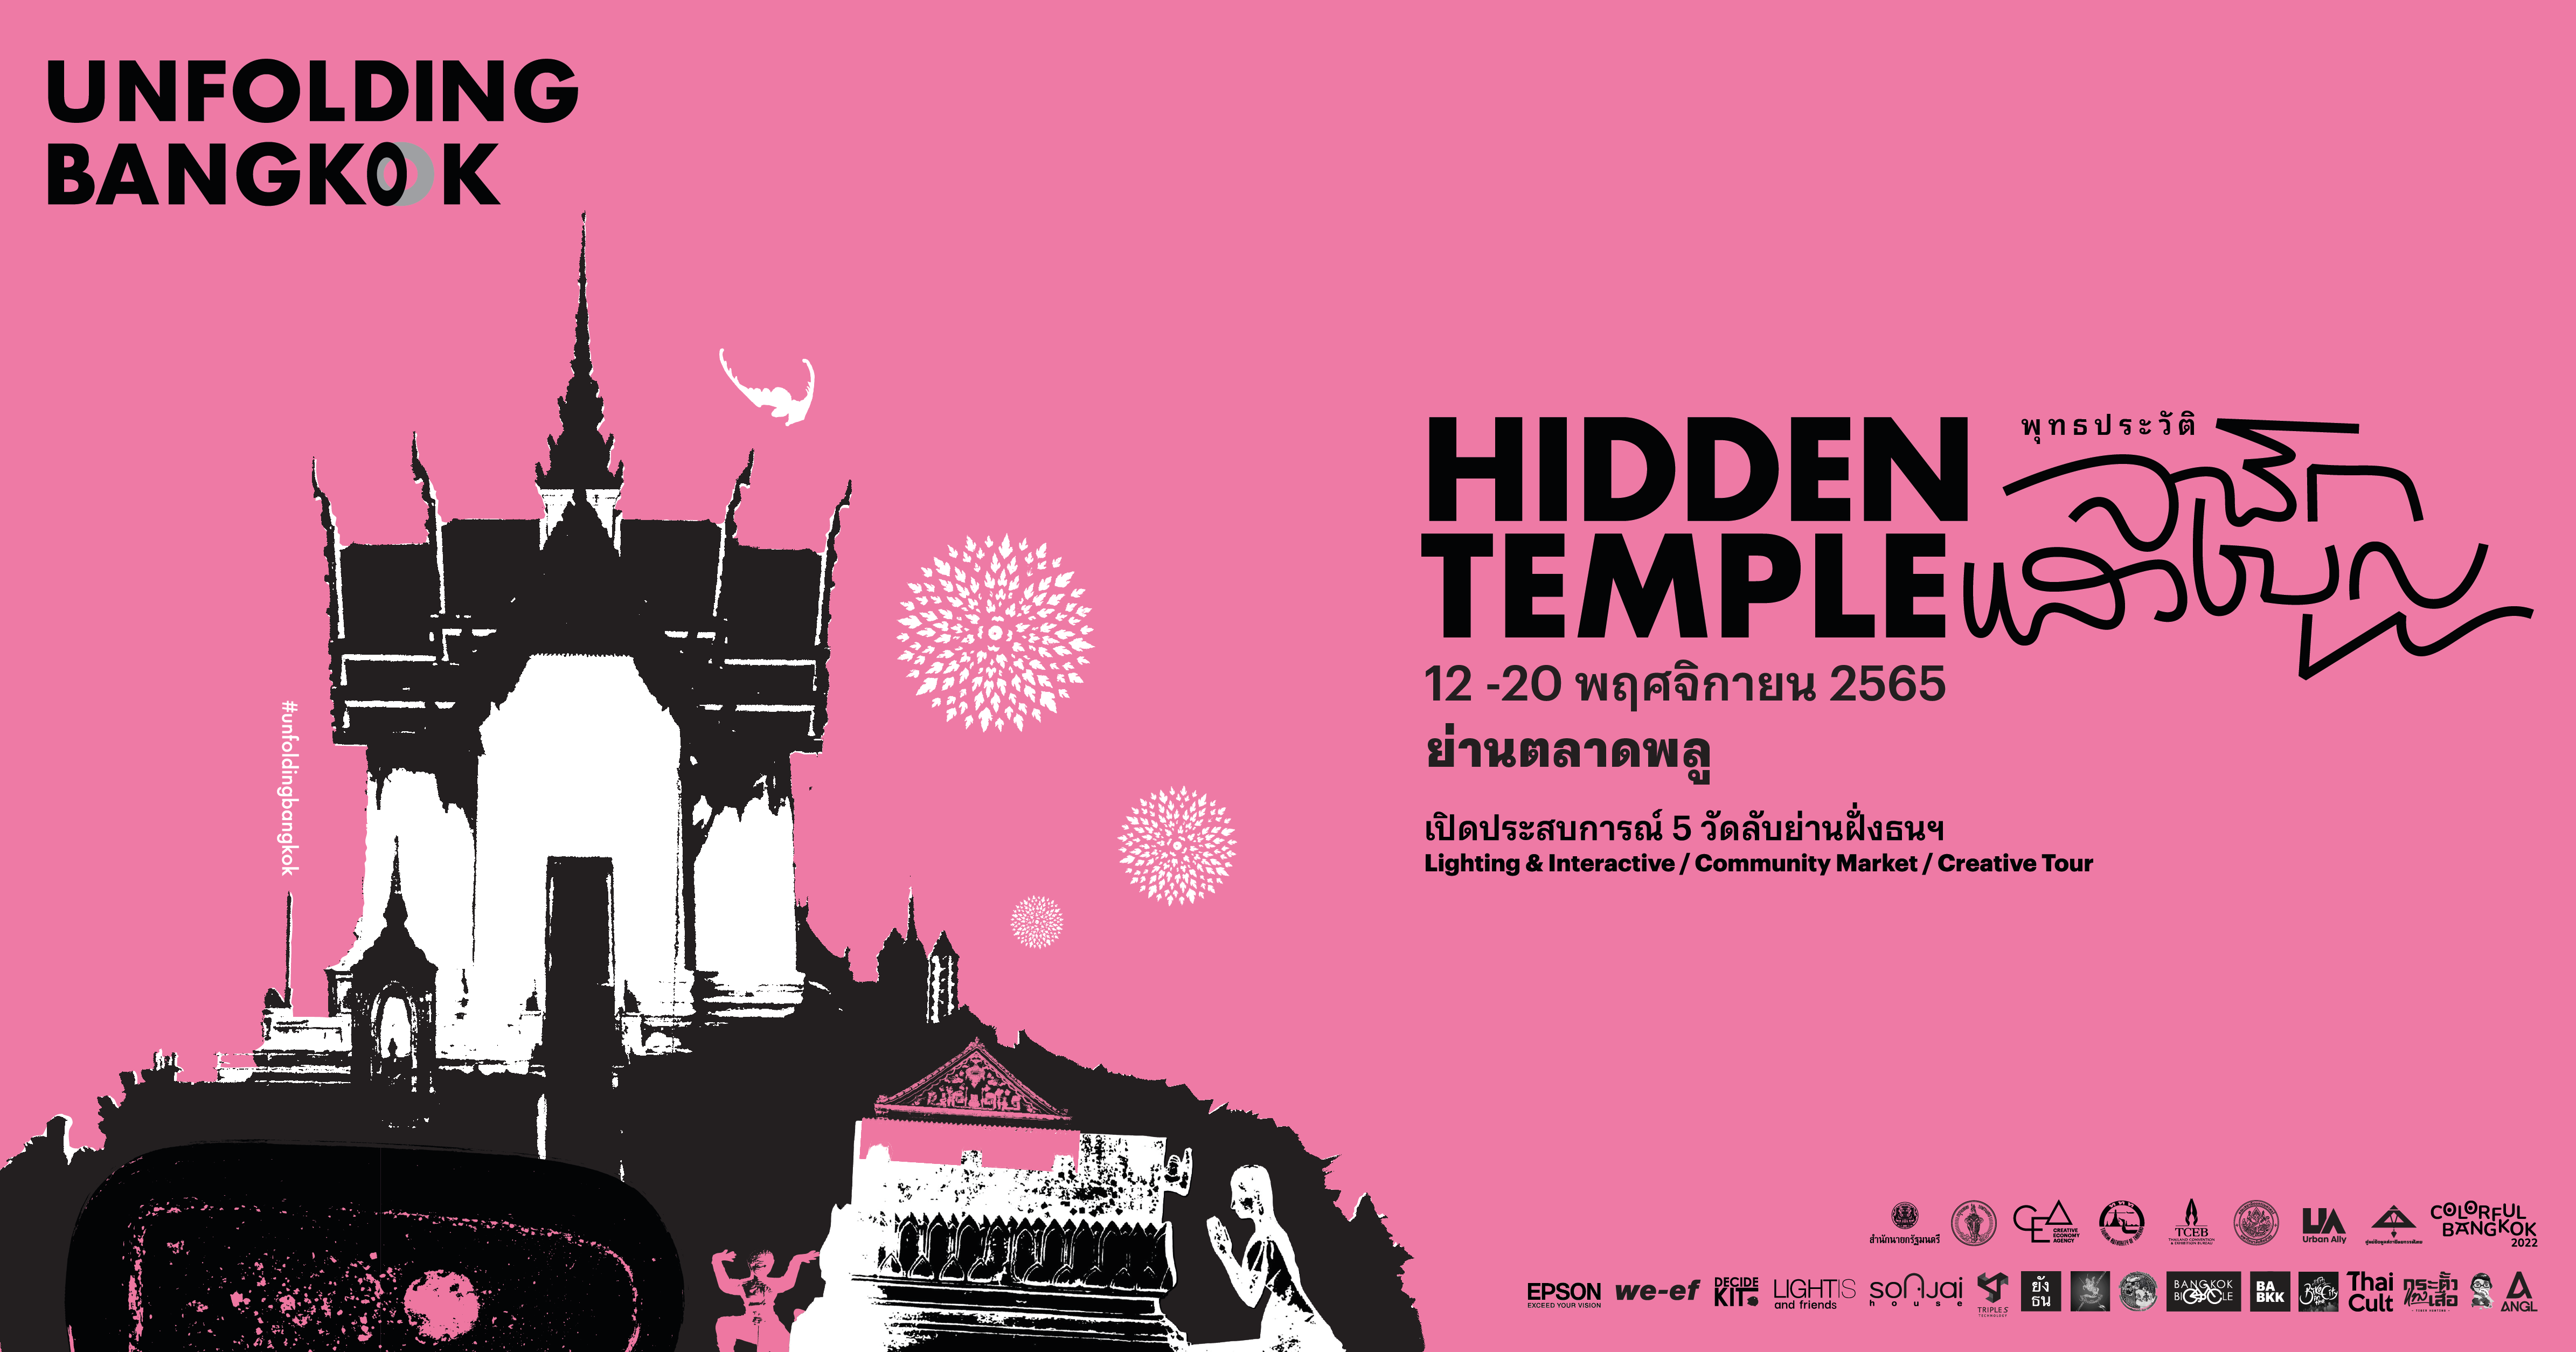 {"th-TH":"Unfolding Bangkok  | Hidden Temple : สมมติสถาน “จาริกแสวงบุญ” ย่านบางยี่เรือ ตลาดพลู","en-US":"Unfolding Bangkok  | Hidden Temple : สมมติสถาน “จาริกแสวงบุญ” ย่านบางยี่เรือ ตลาดพลู"}